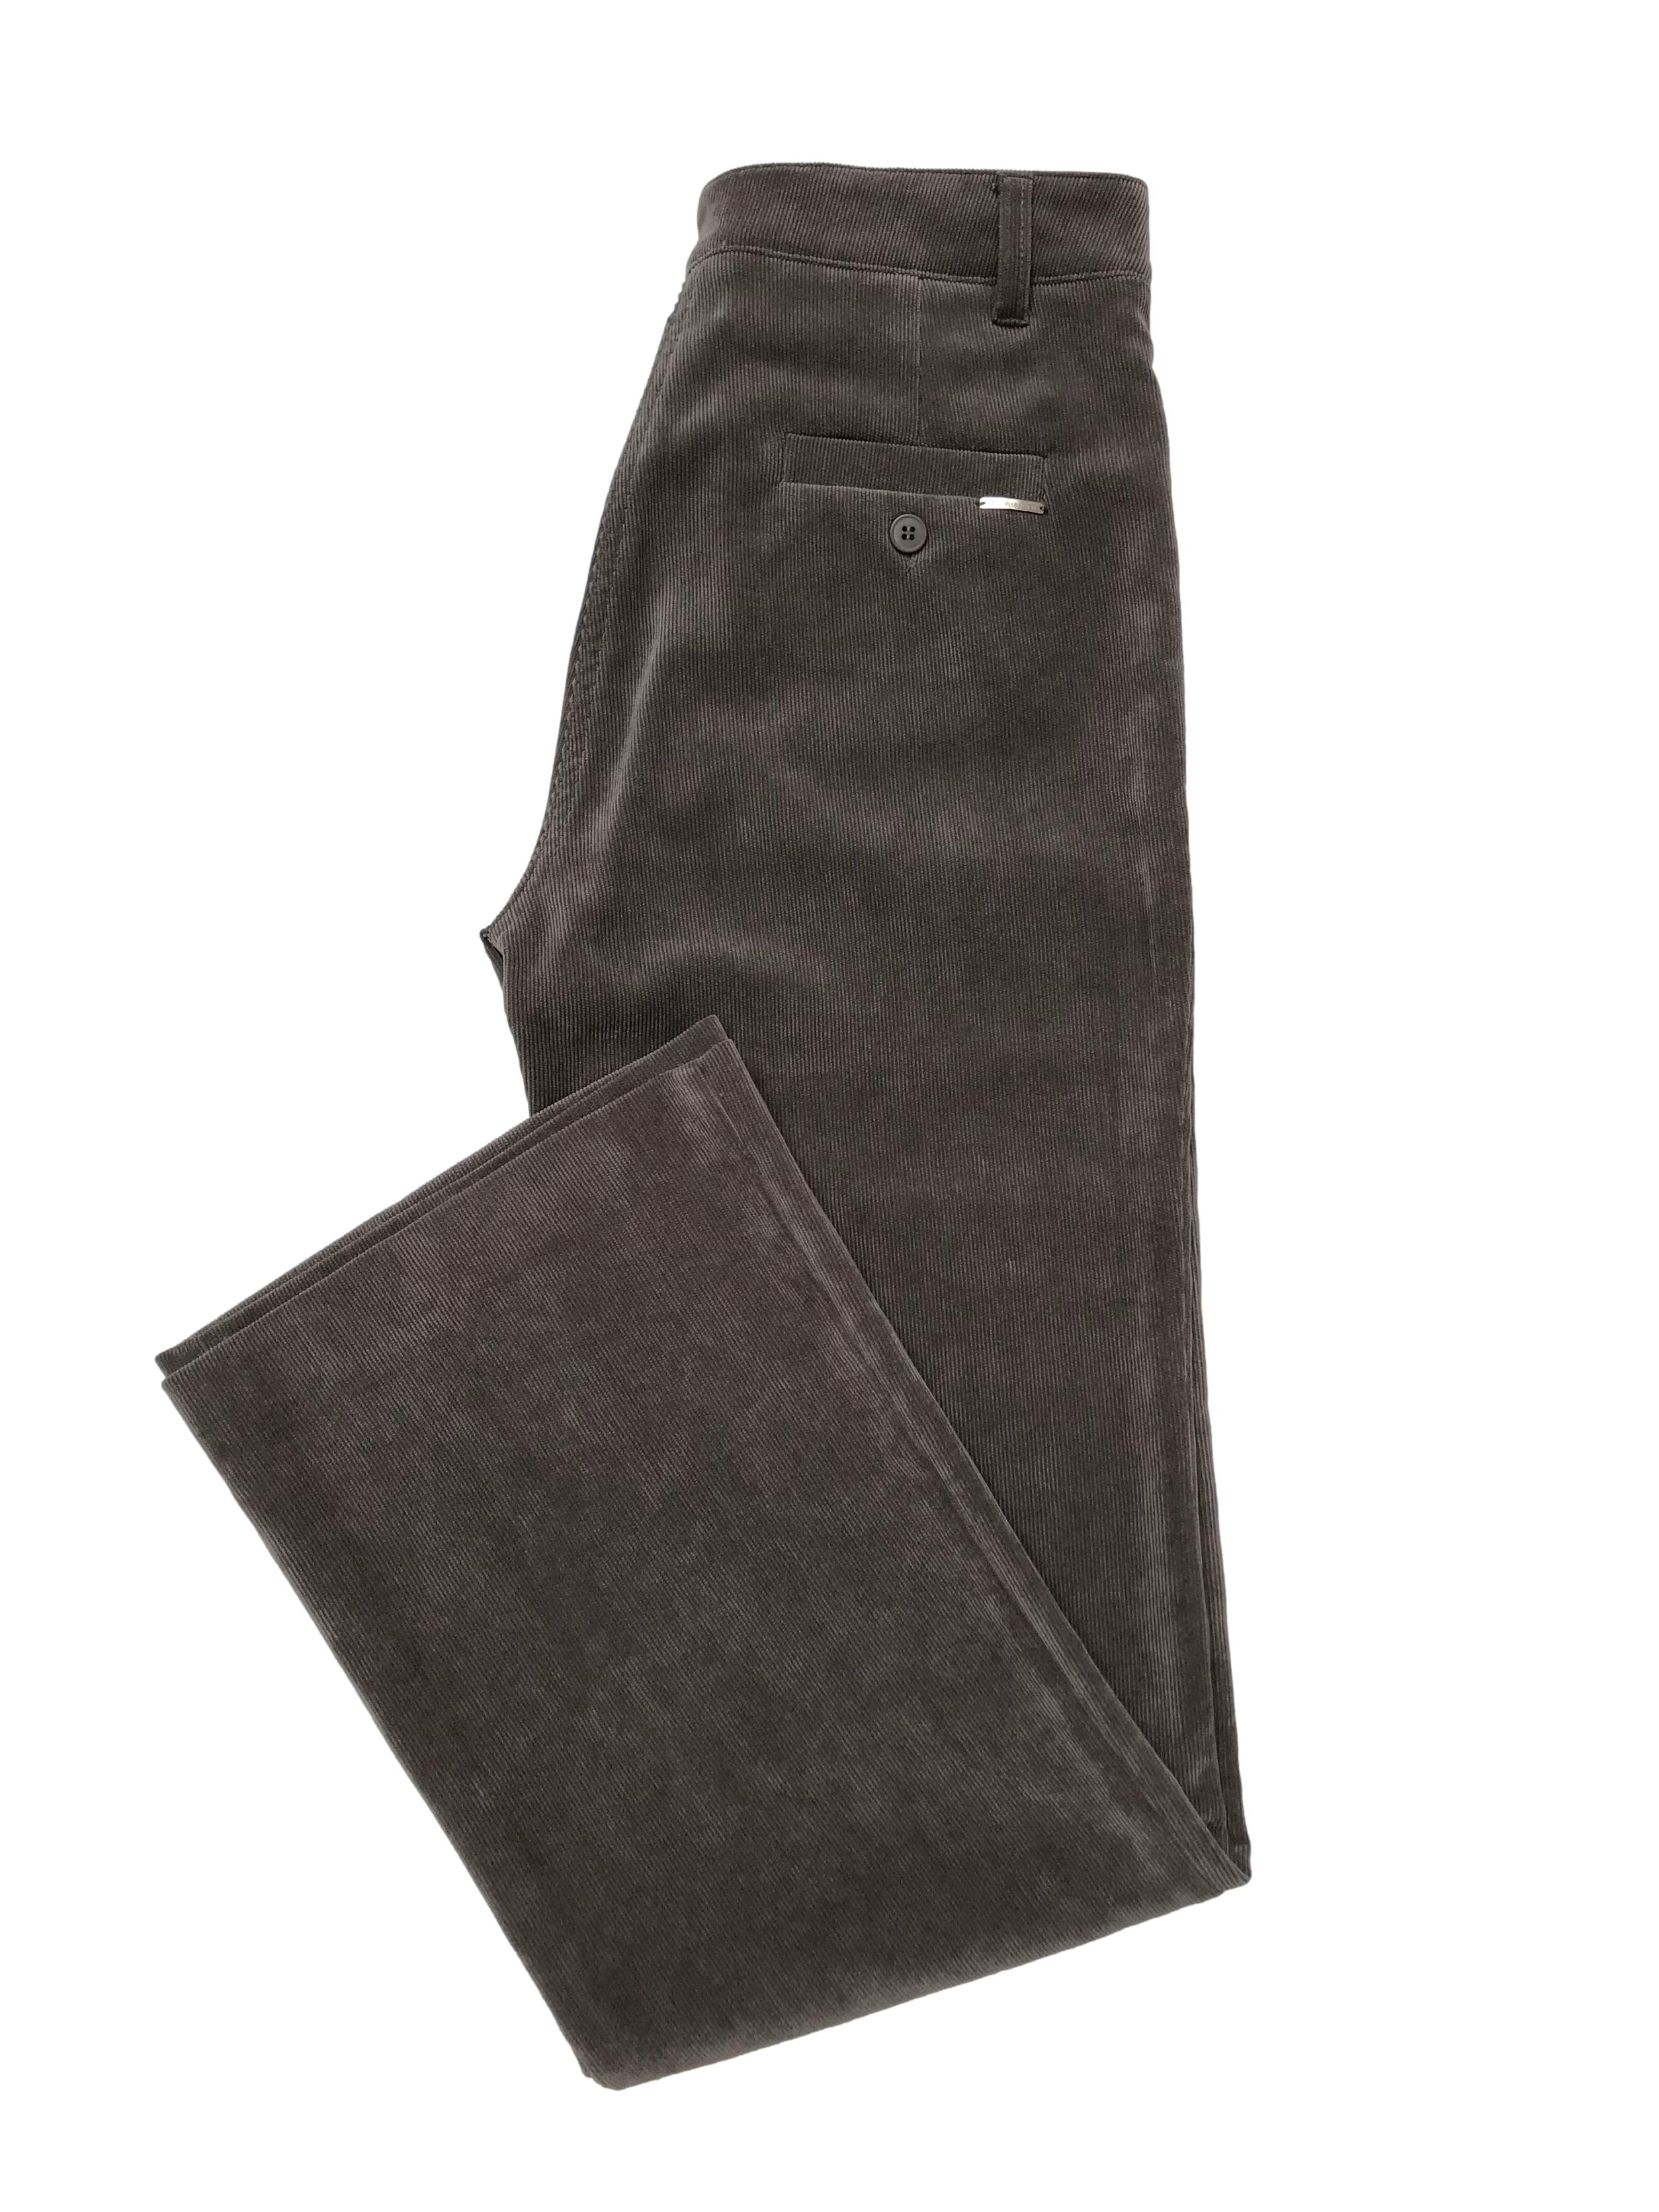 Pantalón Michelle Belau de corduroy en tono cemento efecto tornasol, basta semicampana. Cintura 75cm Largo 105cm